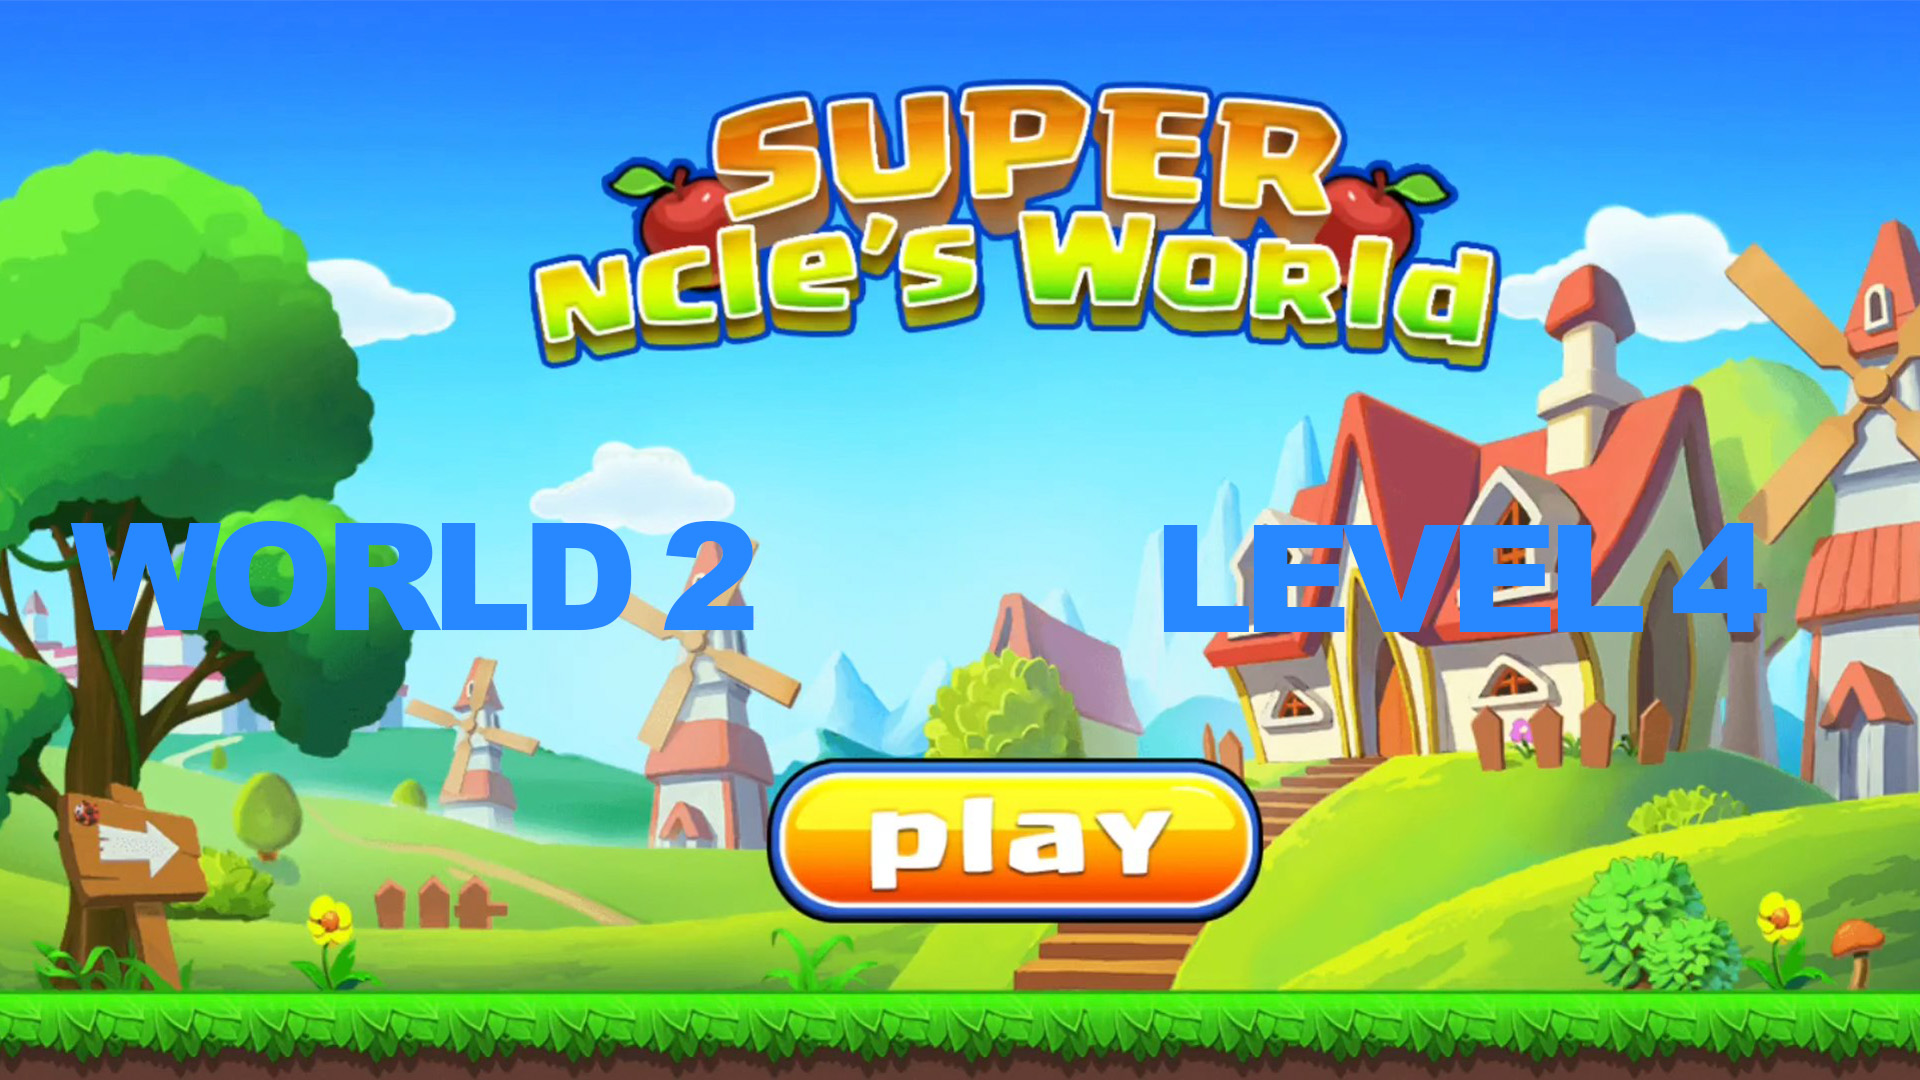 Super ncle's  World 2. levei 4.